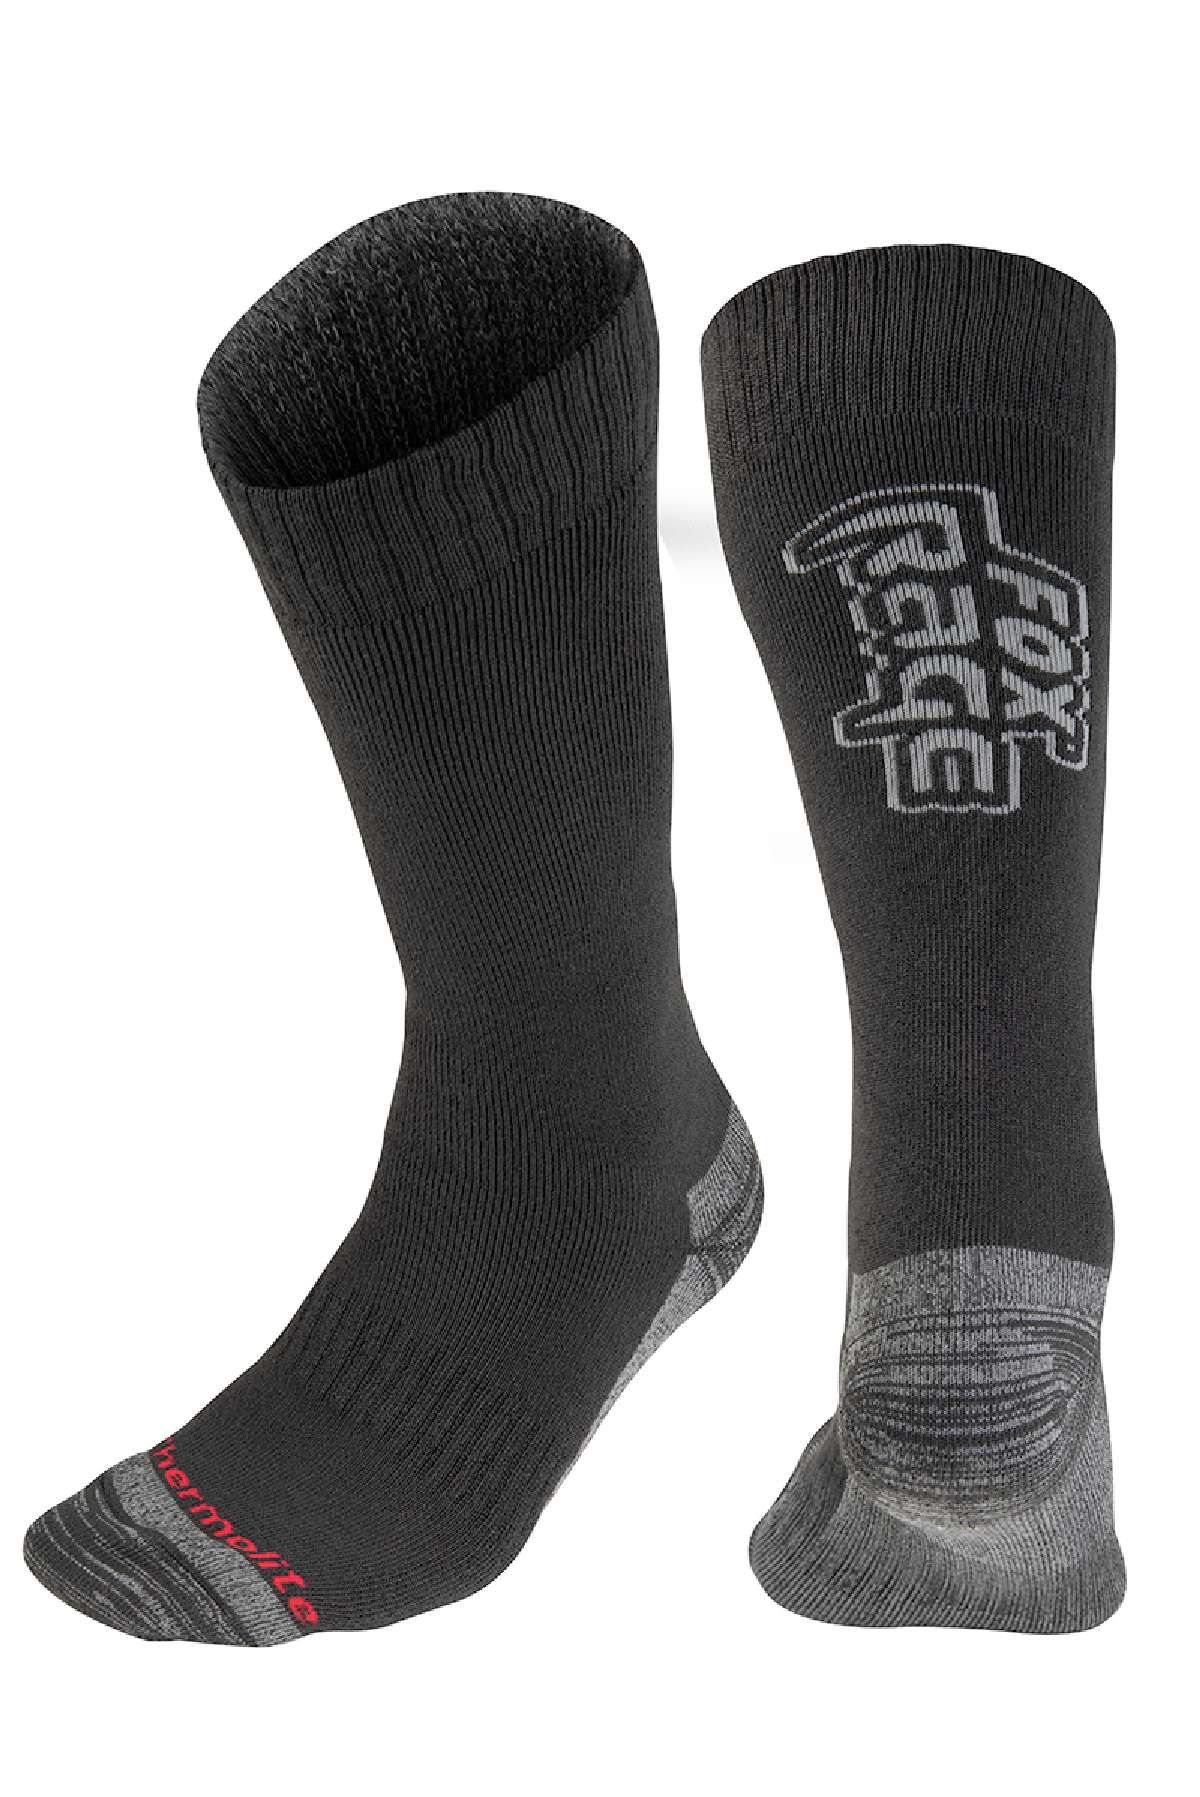 Fox Rage Thermolite Socks Size 44-47